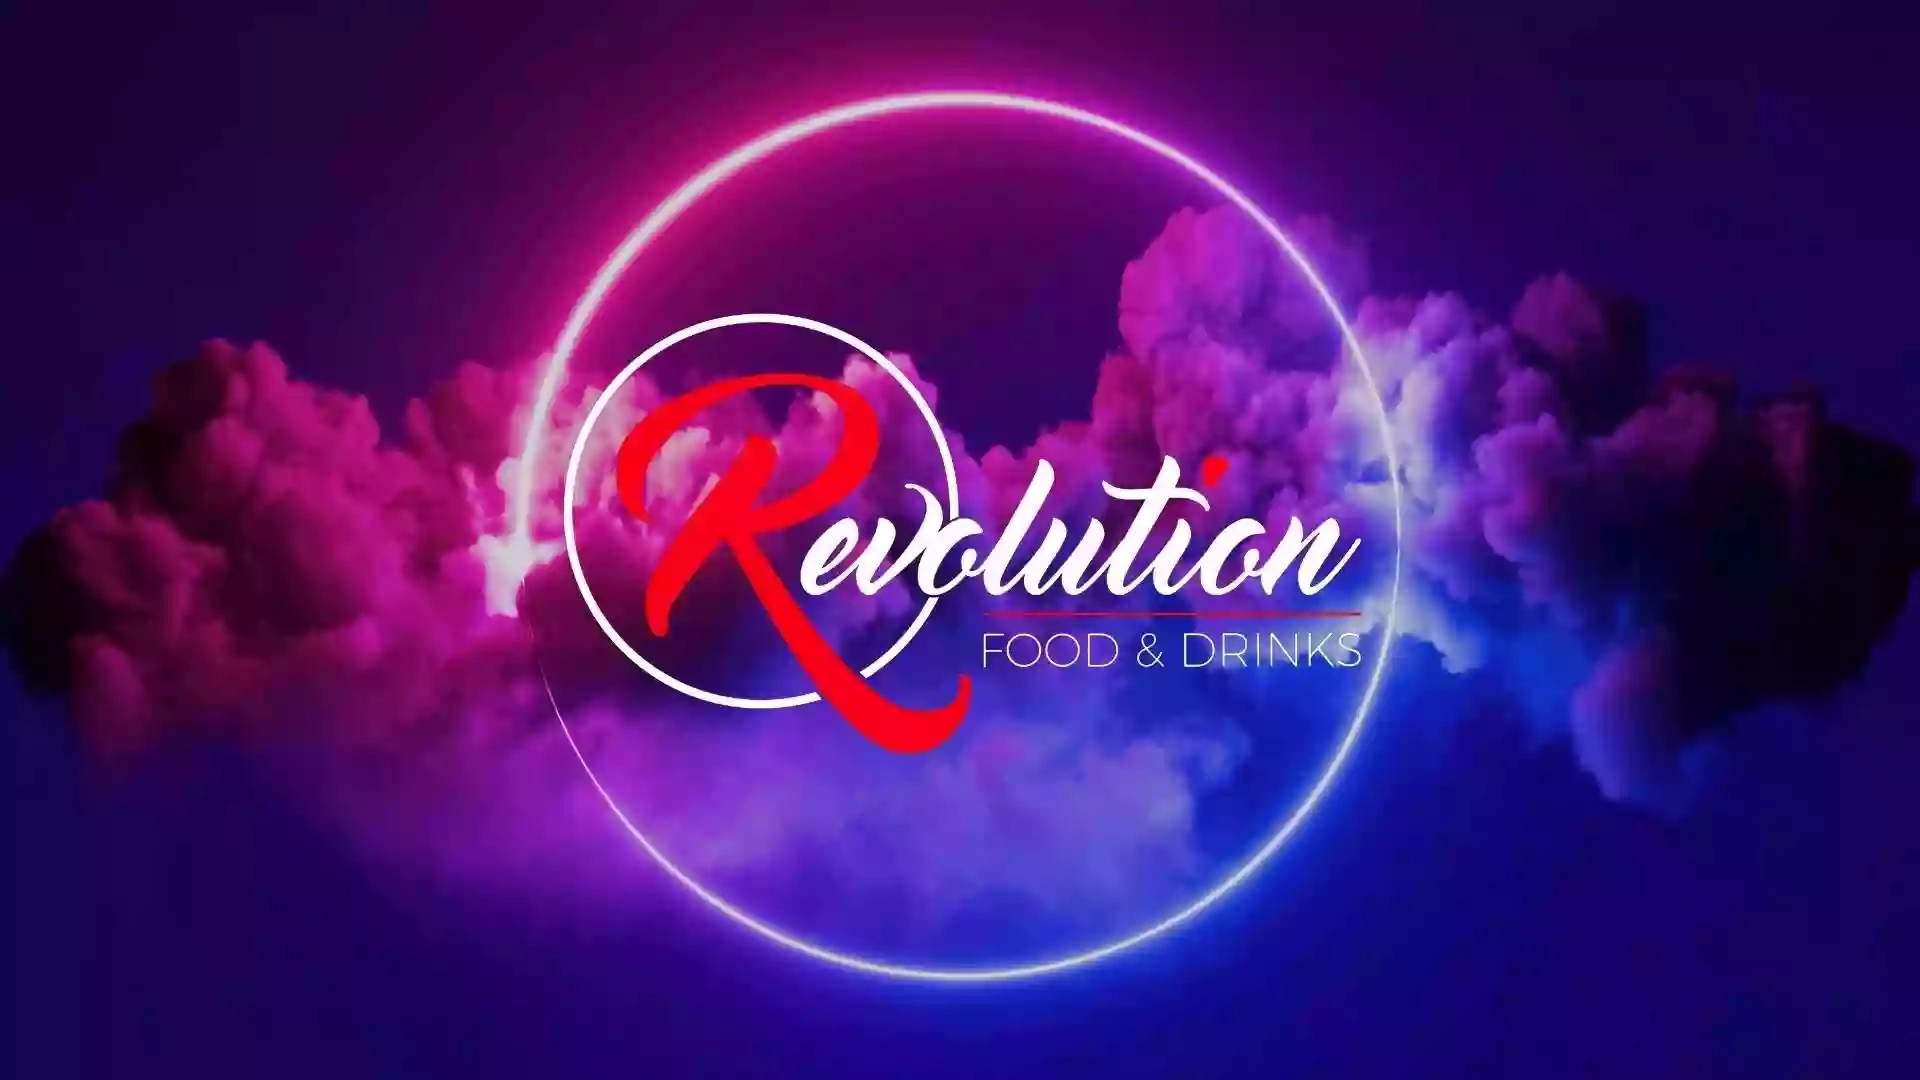 Revolution Food & Drinks